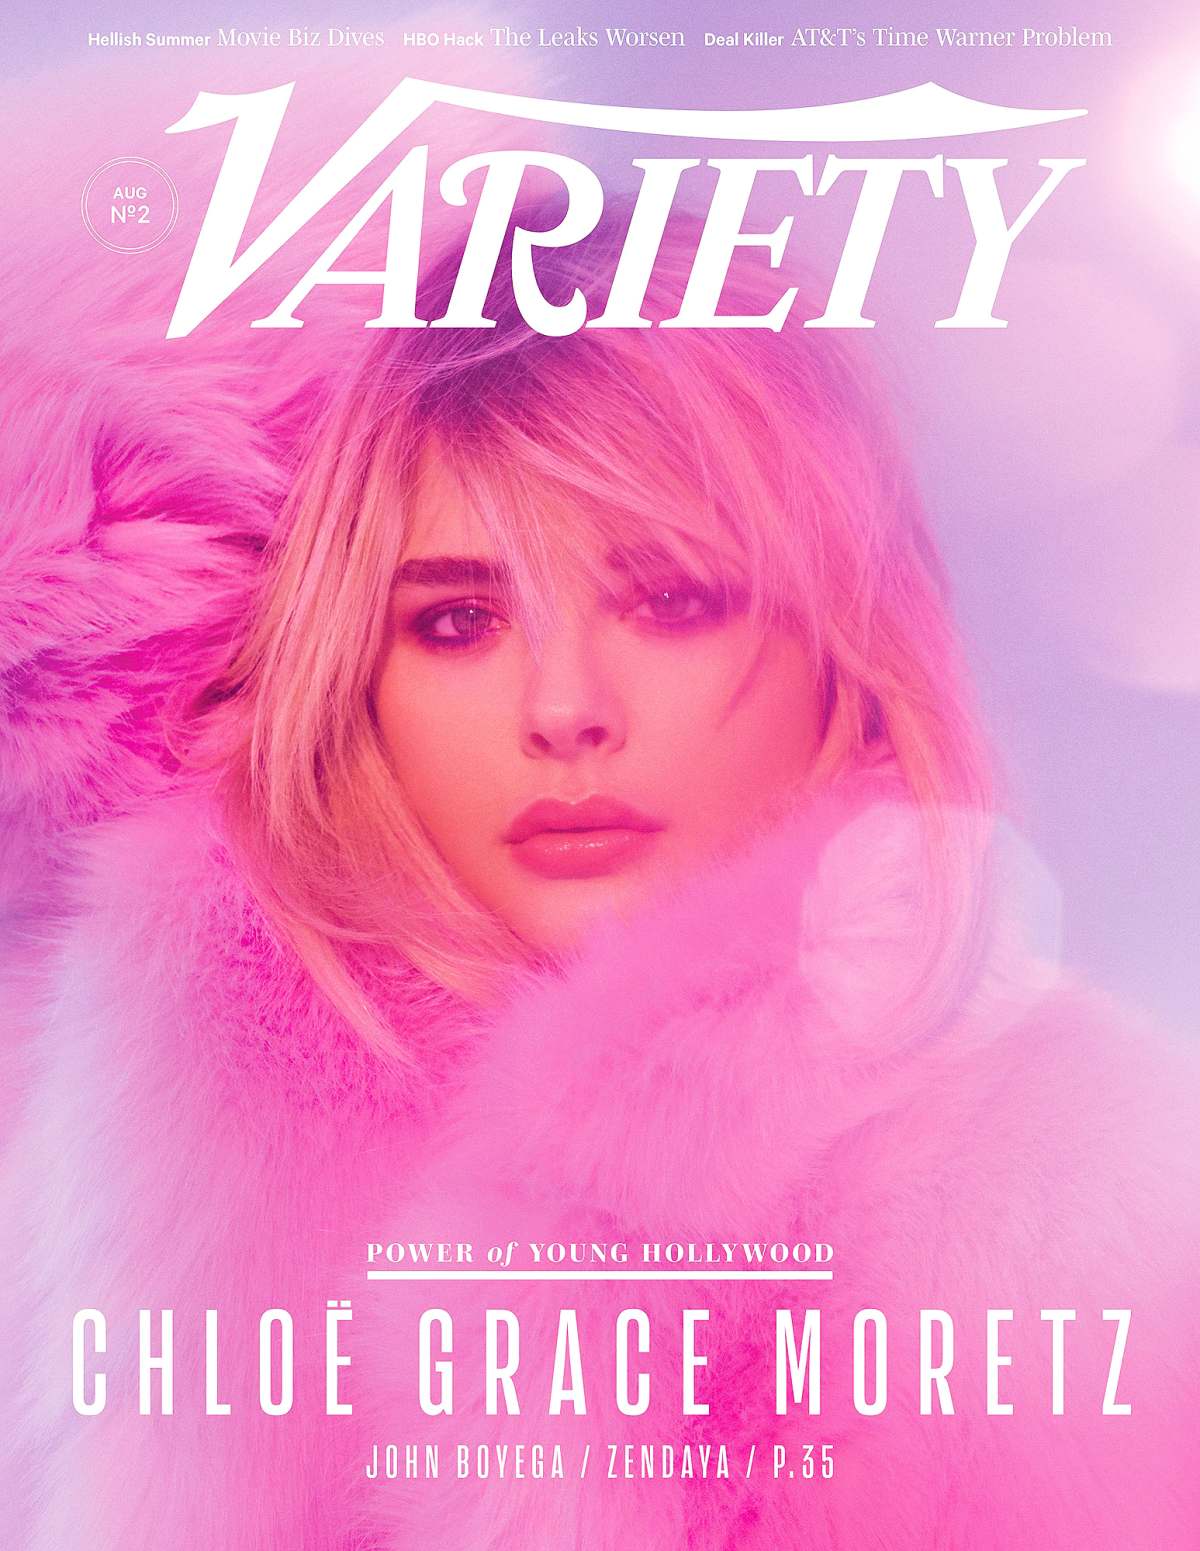 Chloë Grace Moretz: I was body-shamed by male co-star when I was 15, Chloë  Grace Moretz